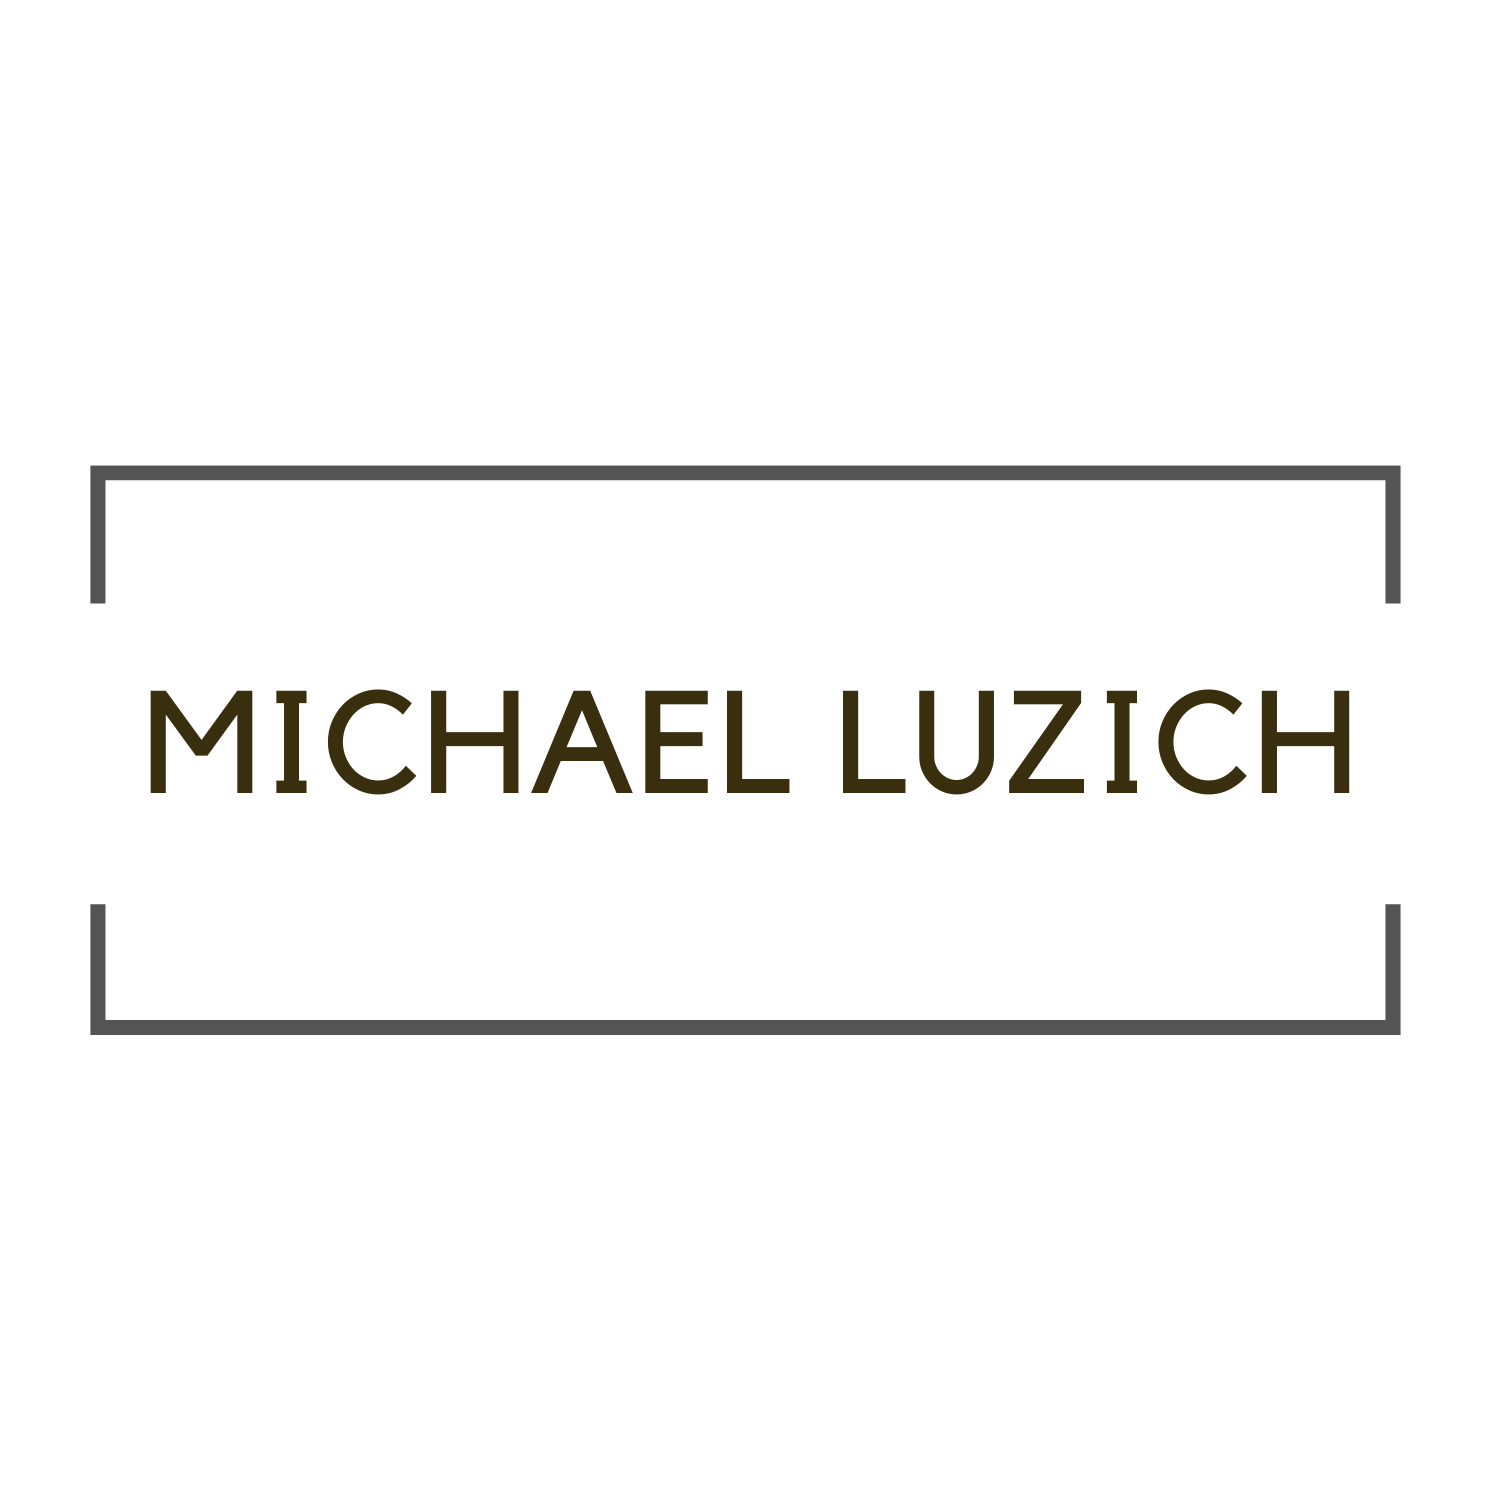 Michael Luzich | Social Impacting